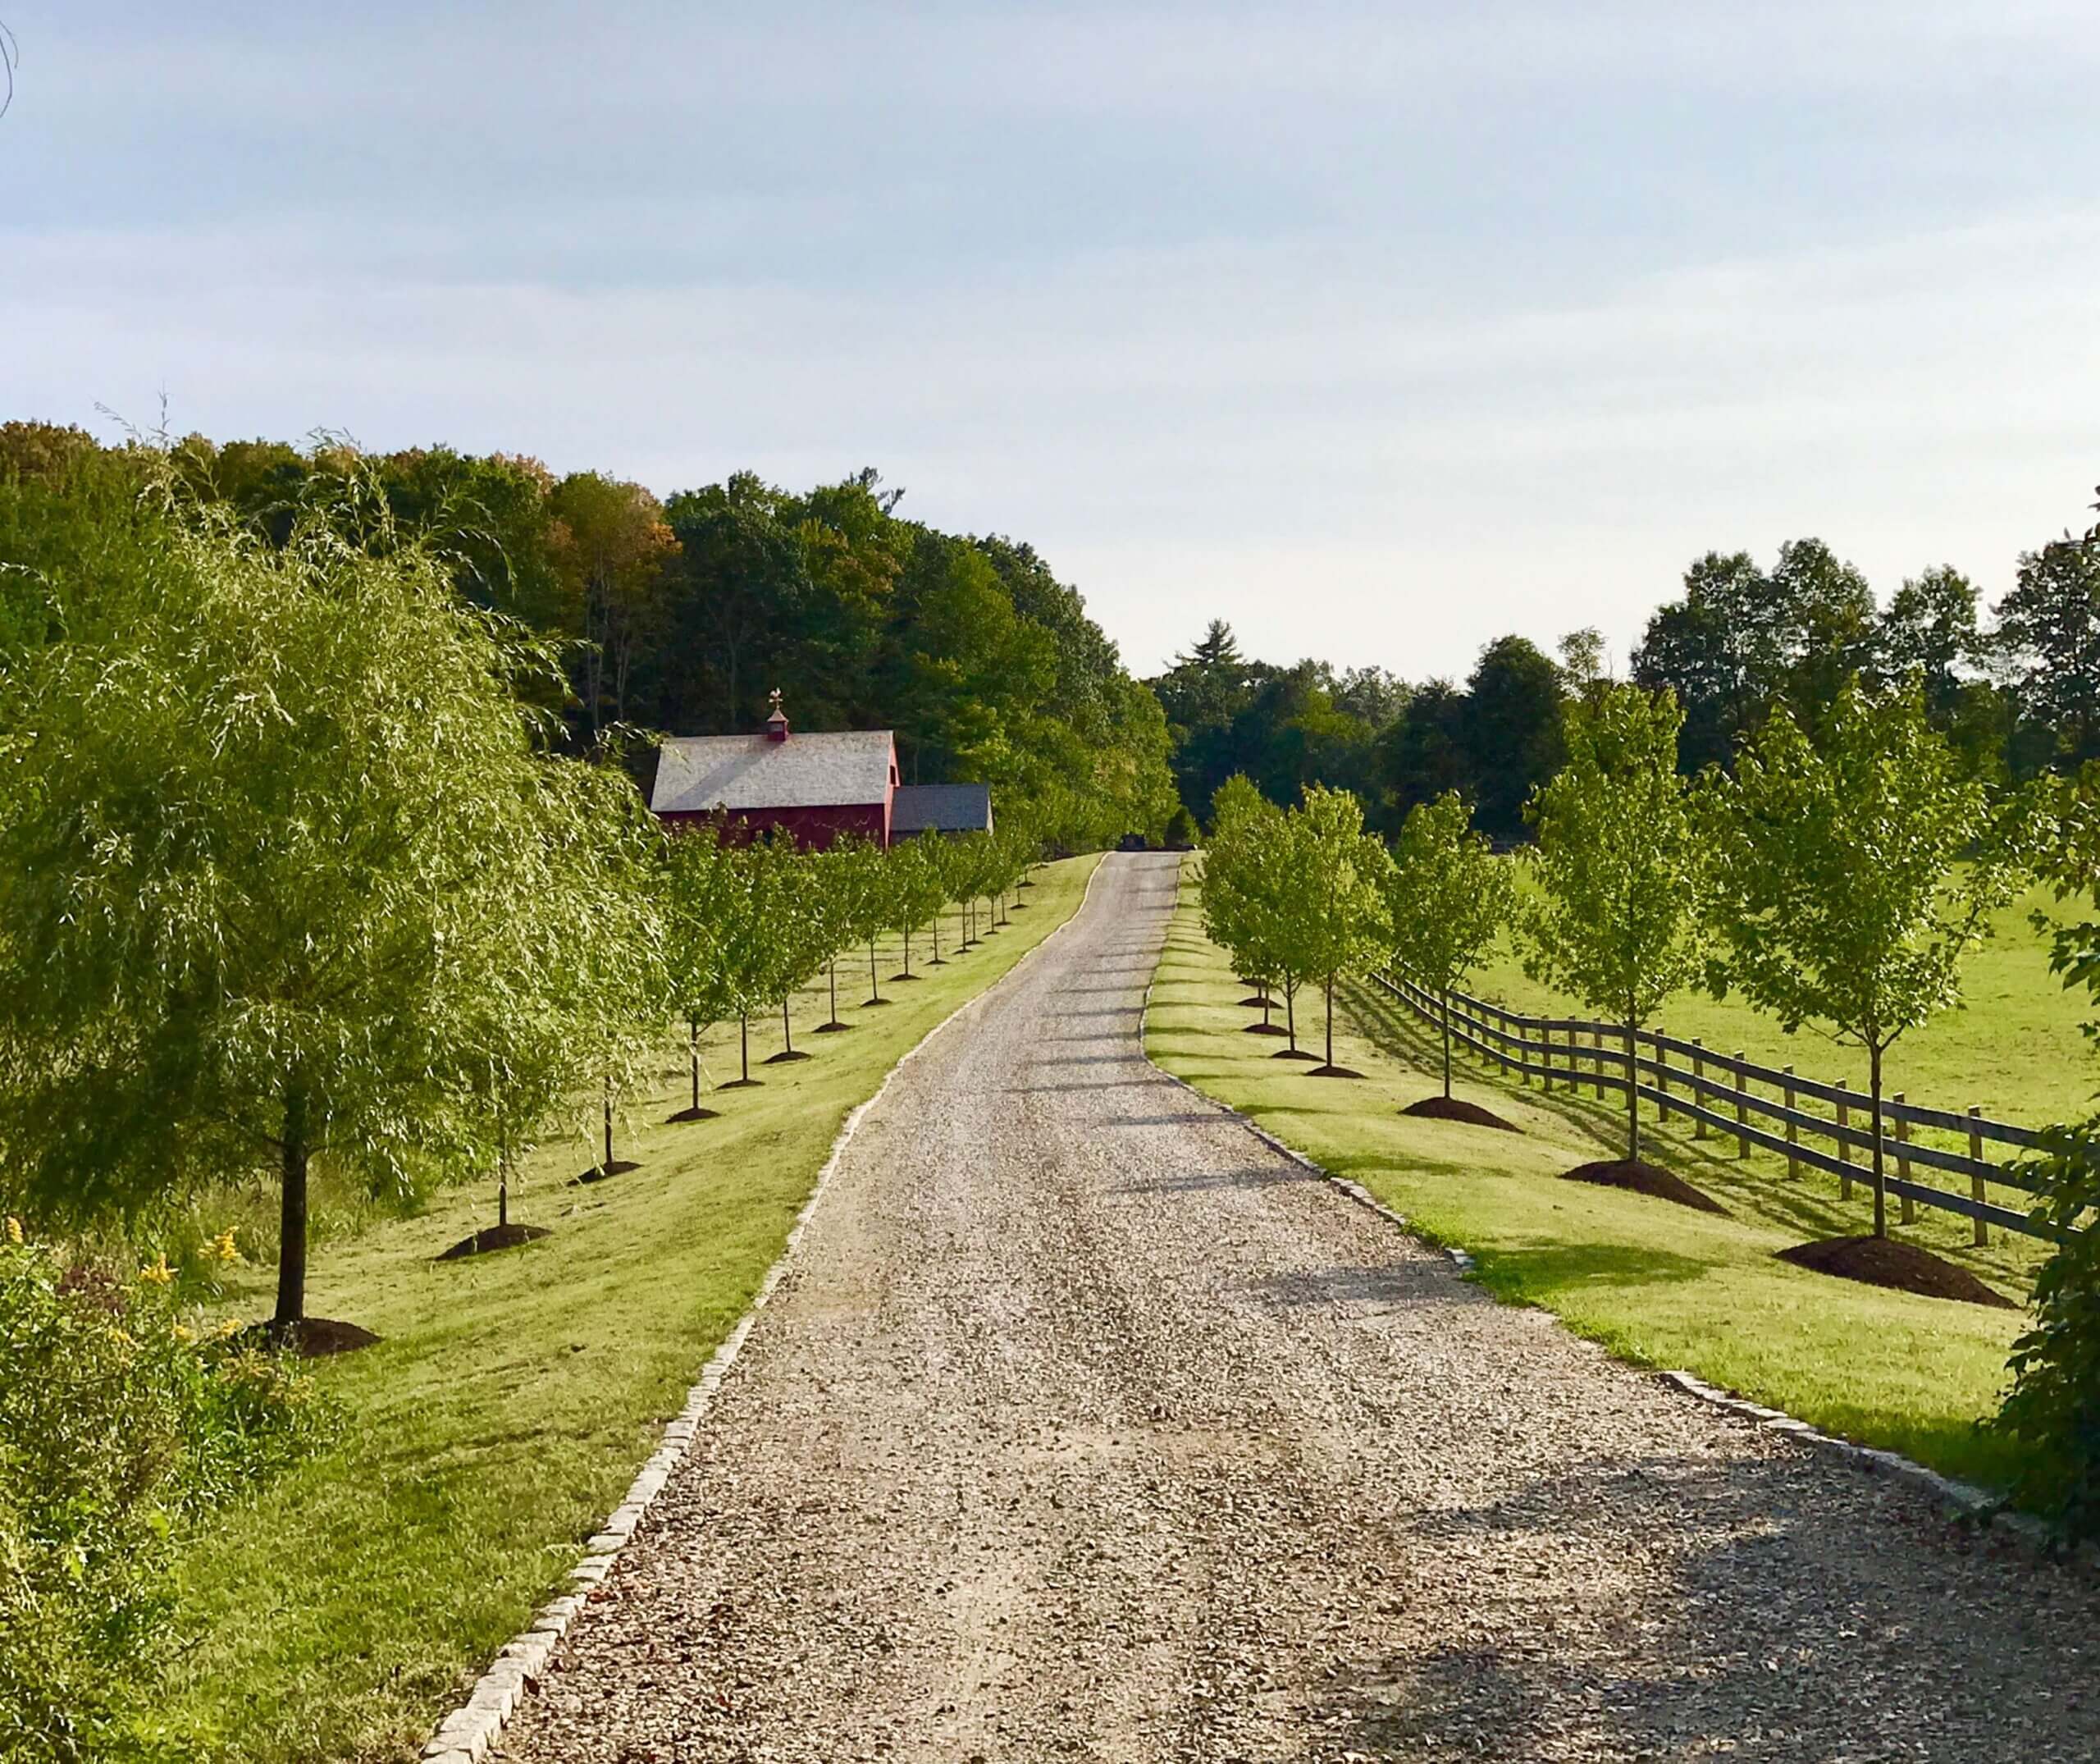 The driveway entering June Farms